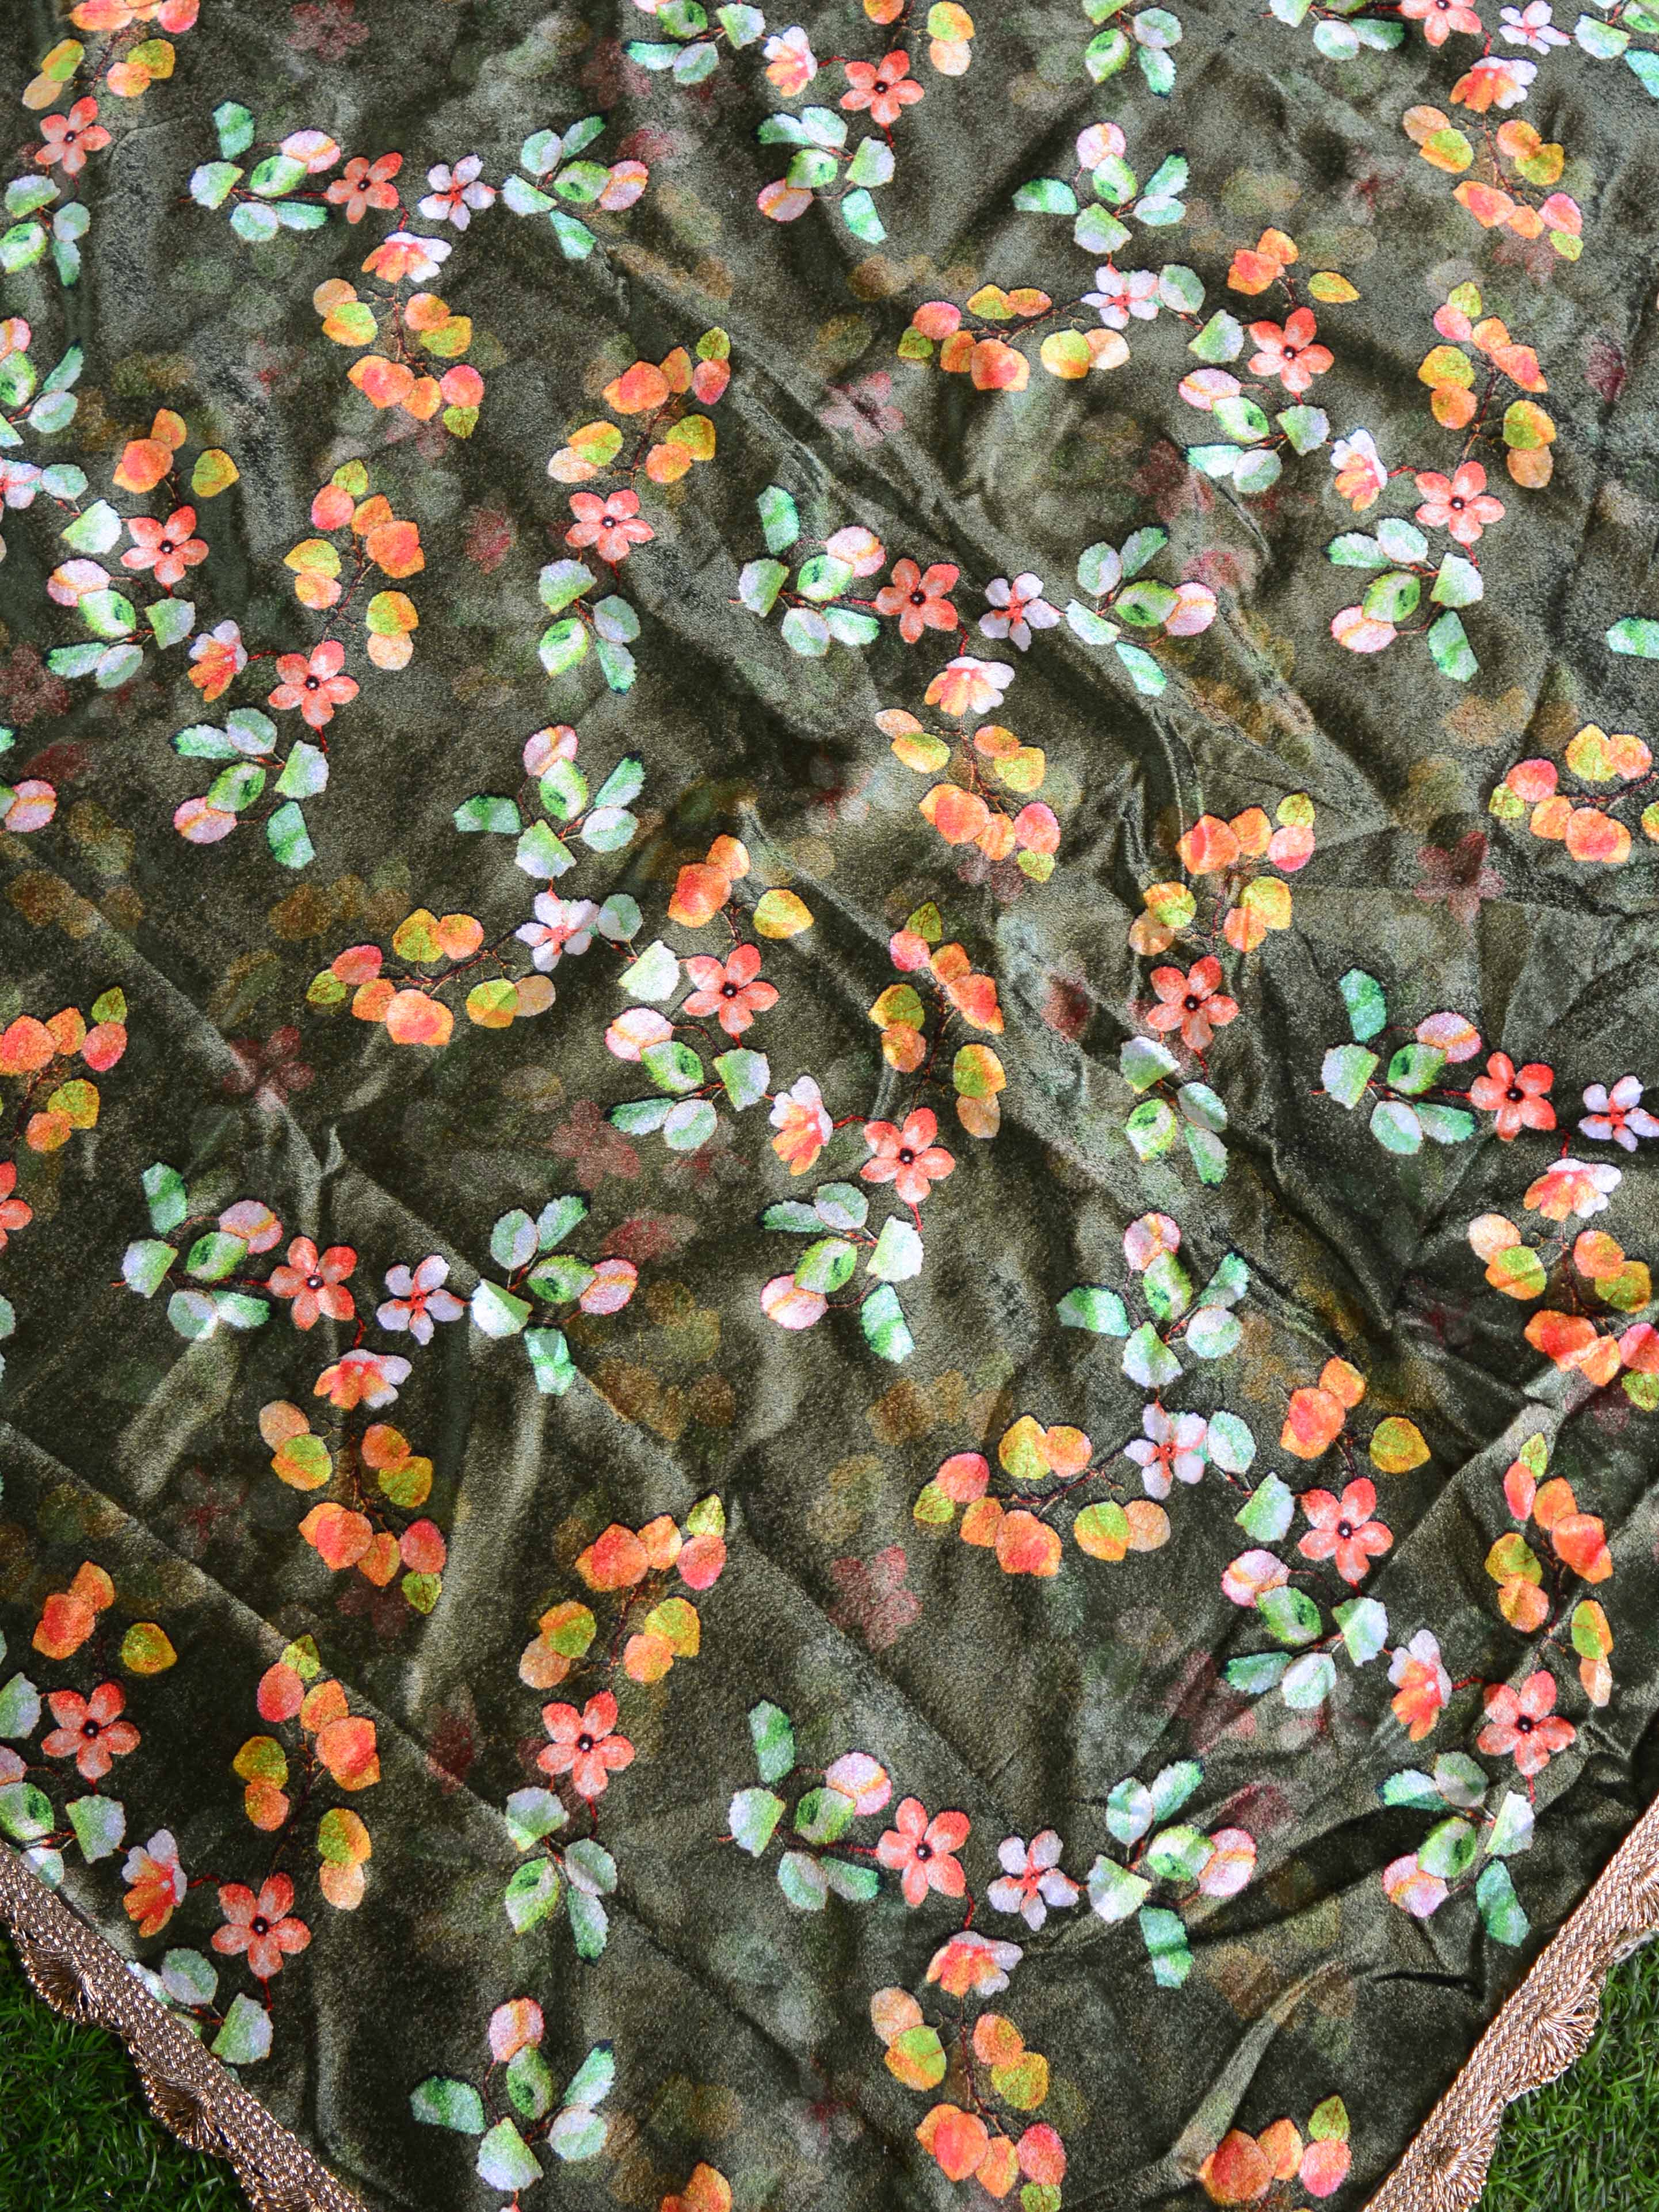 Banarasee Semi Silk Salwar Kameez Fabric With Velvet Gotapatti Dupatta-Green